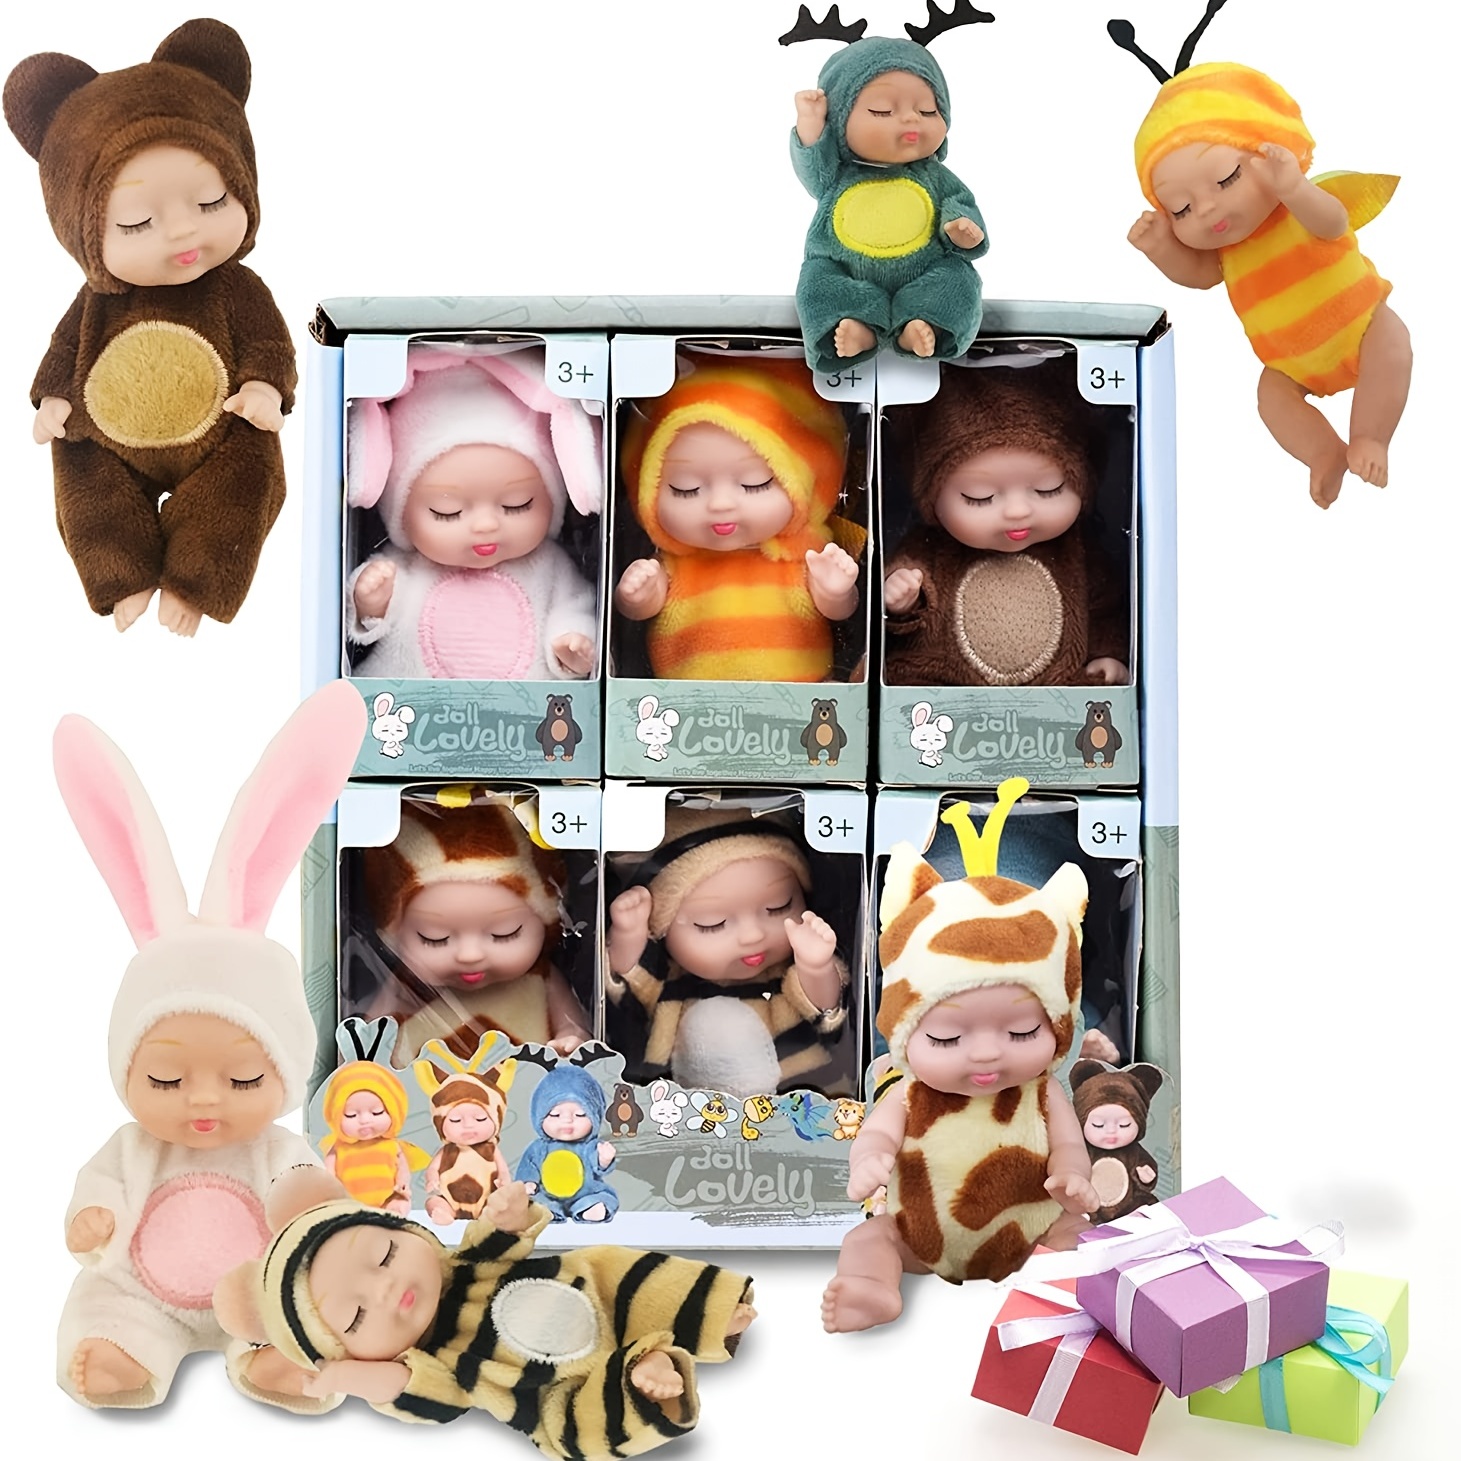 8 PCS Tiny Dolls, Silicone Princess Mini Doll for Girls, DIY